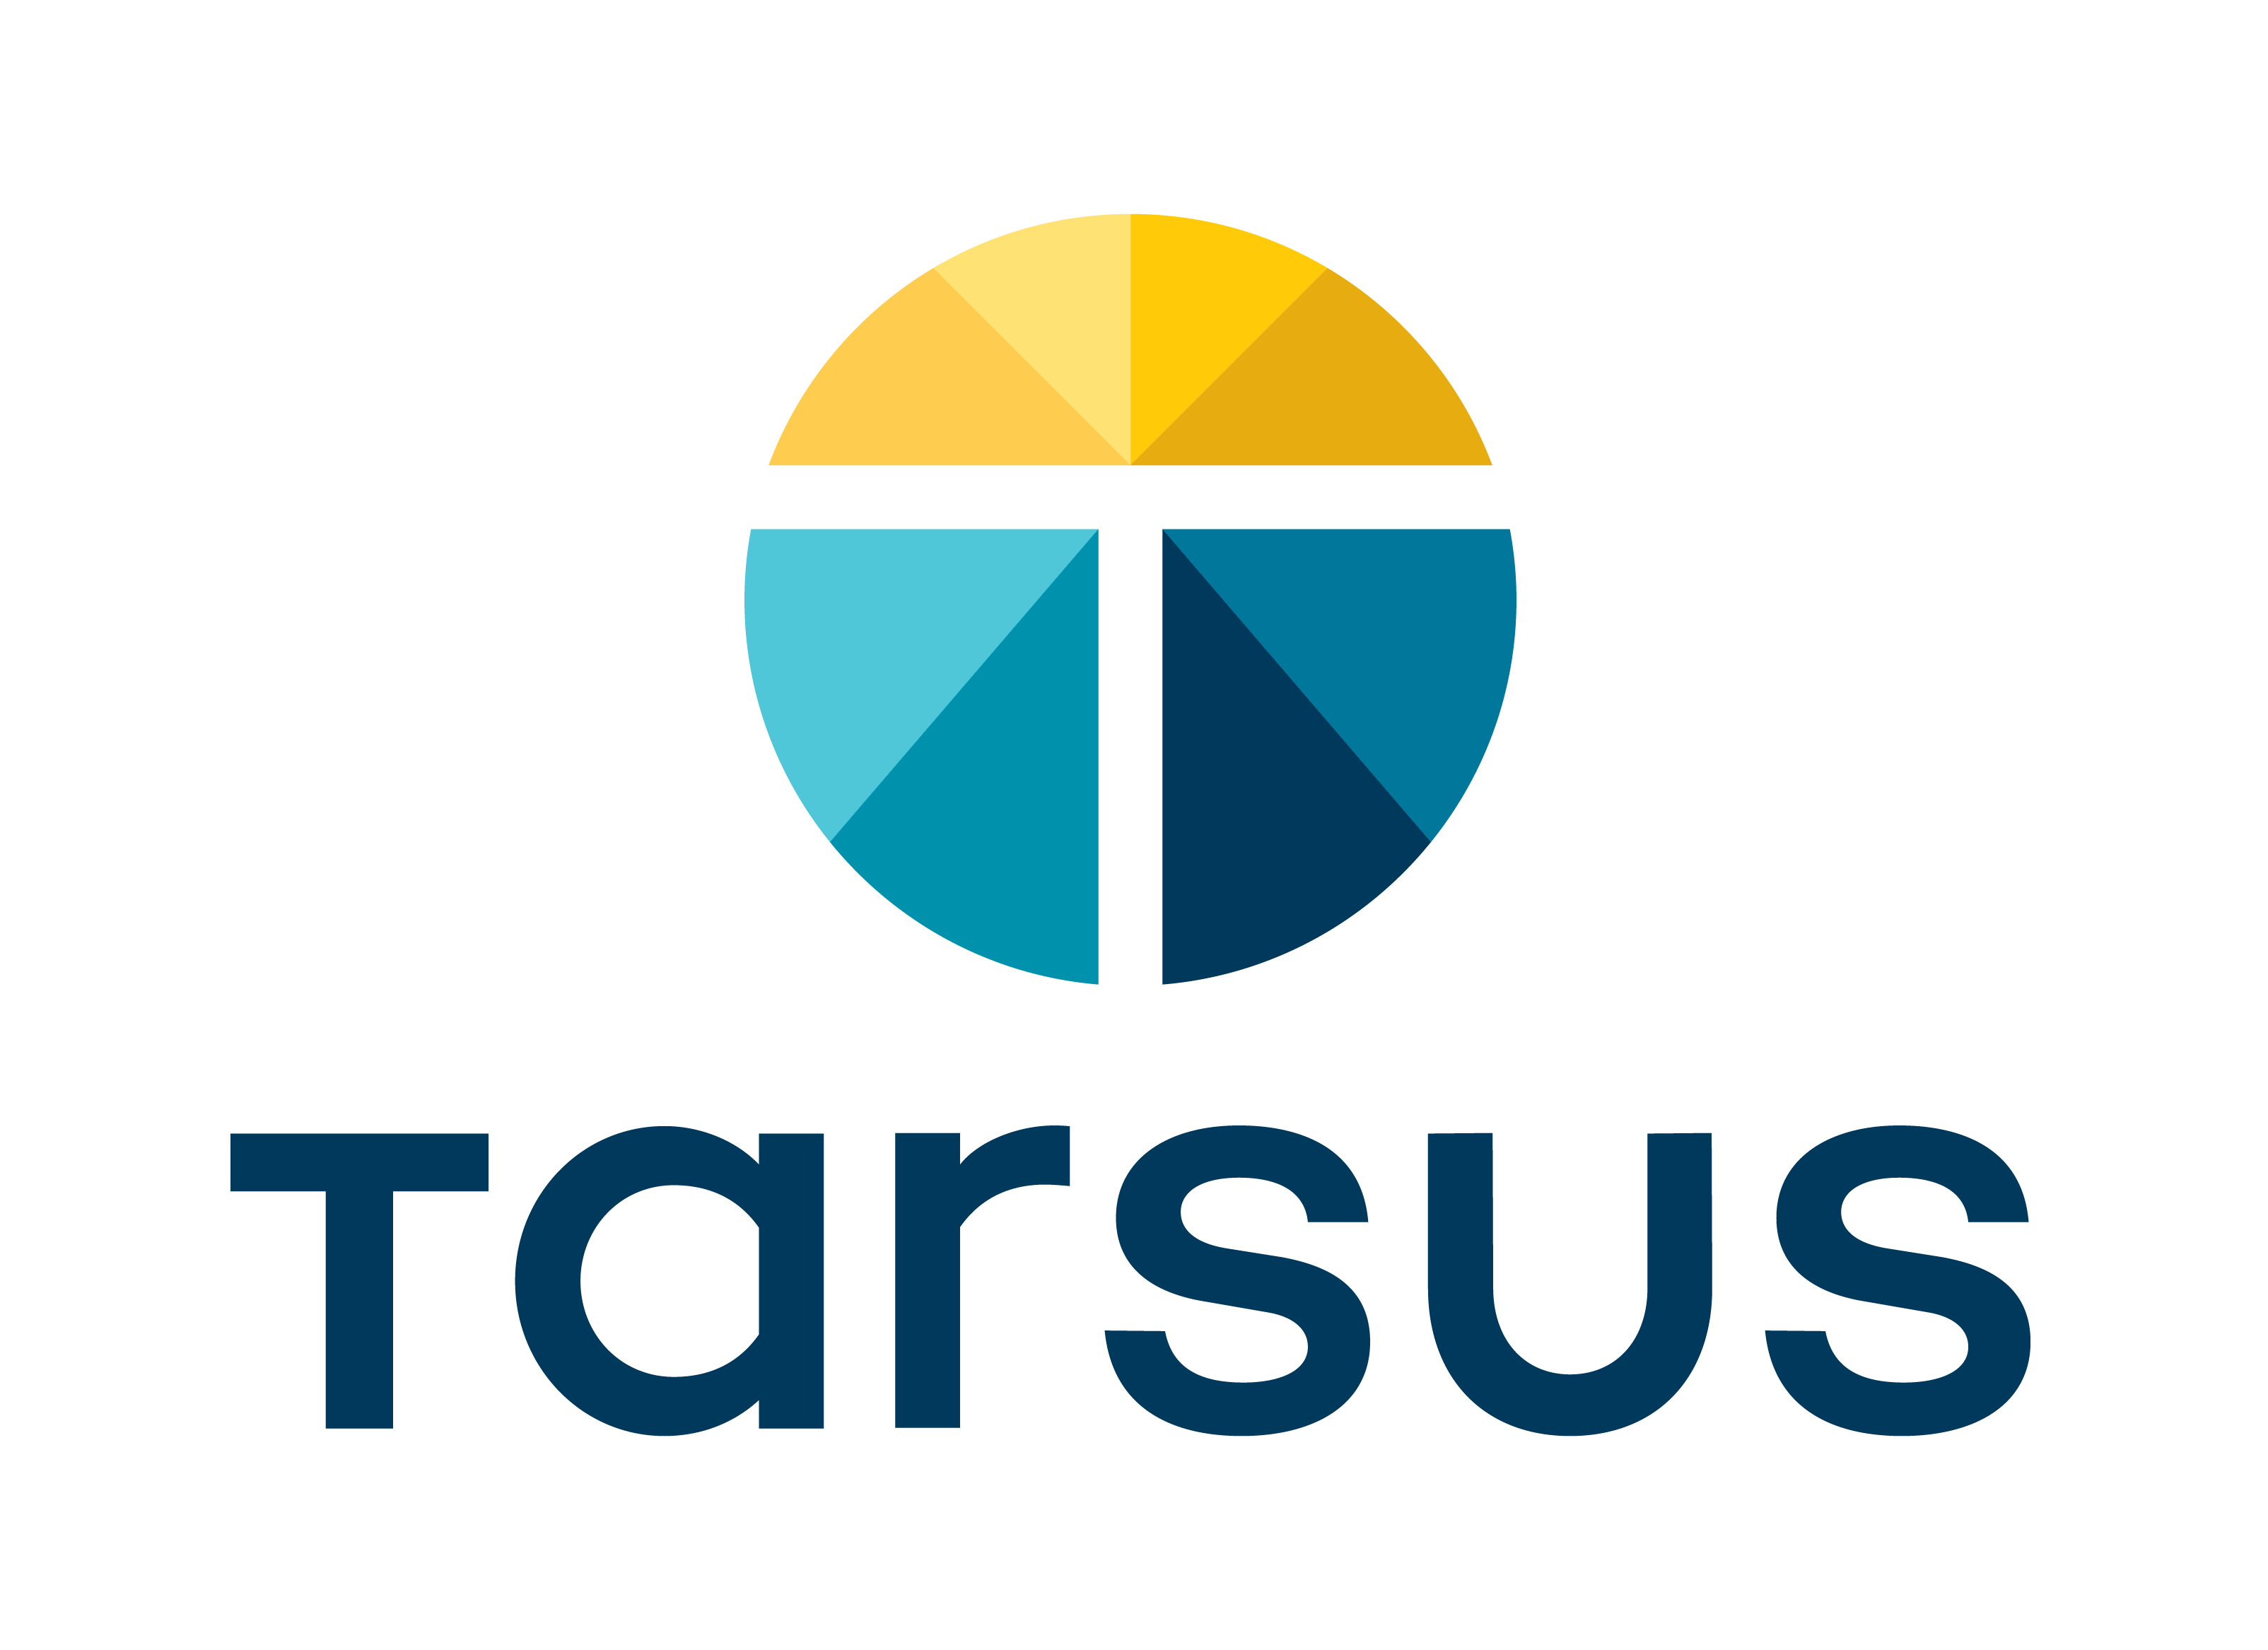 Tarsus logo